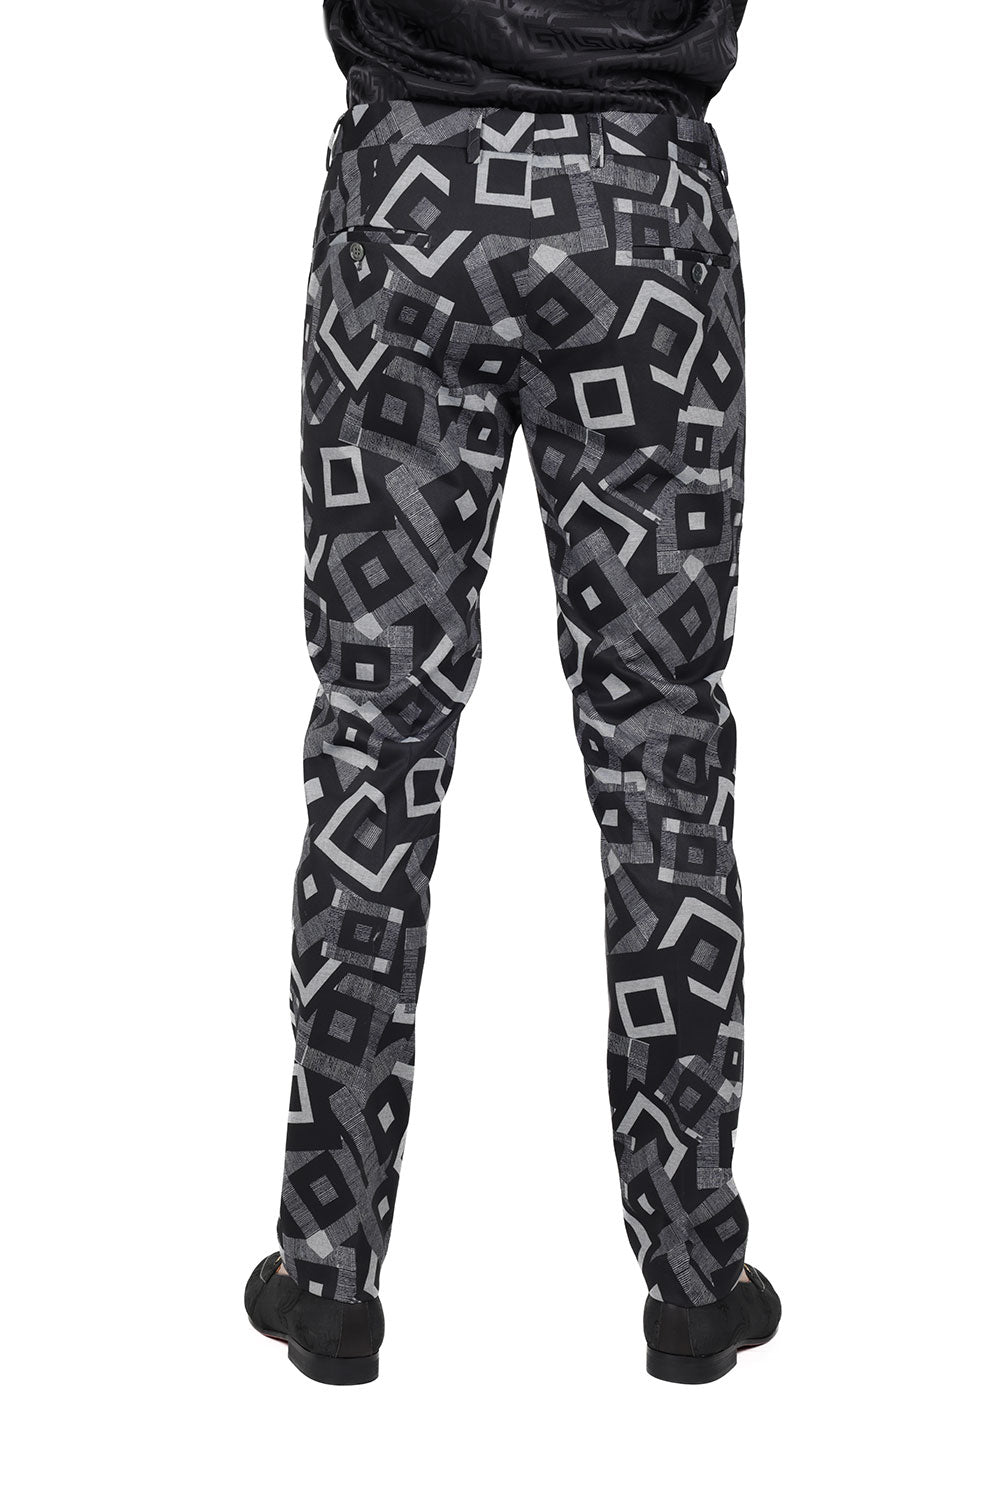 BARABAS men's cube prints checkered plaid navy black chino pants CP148